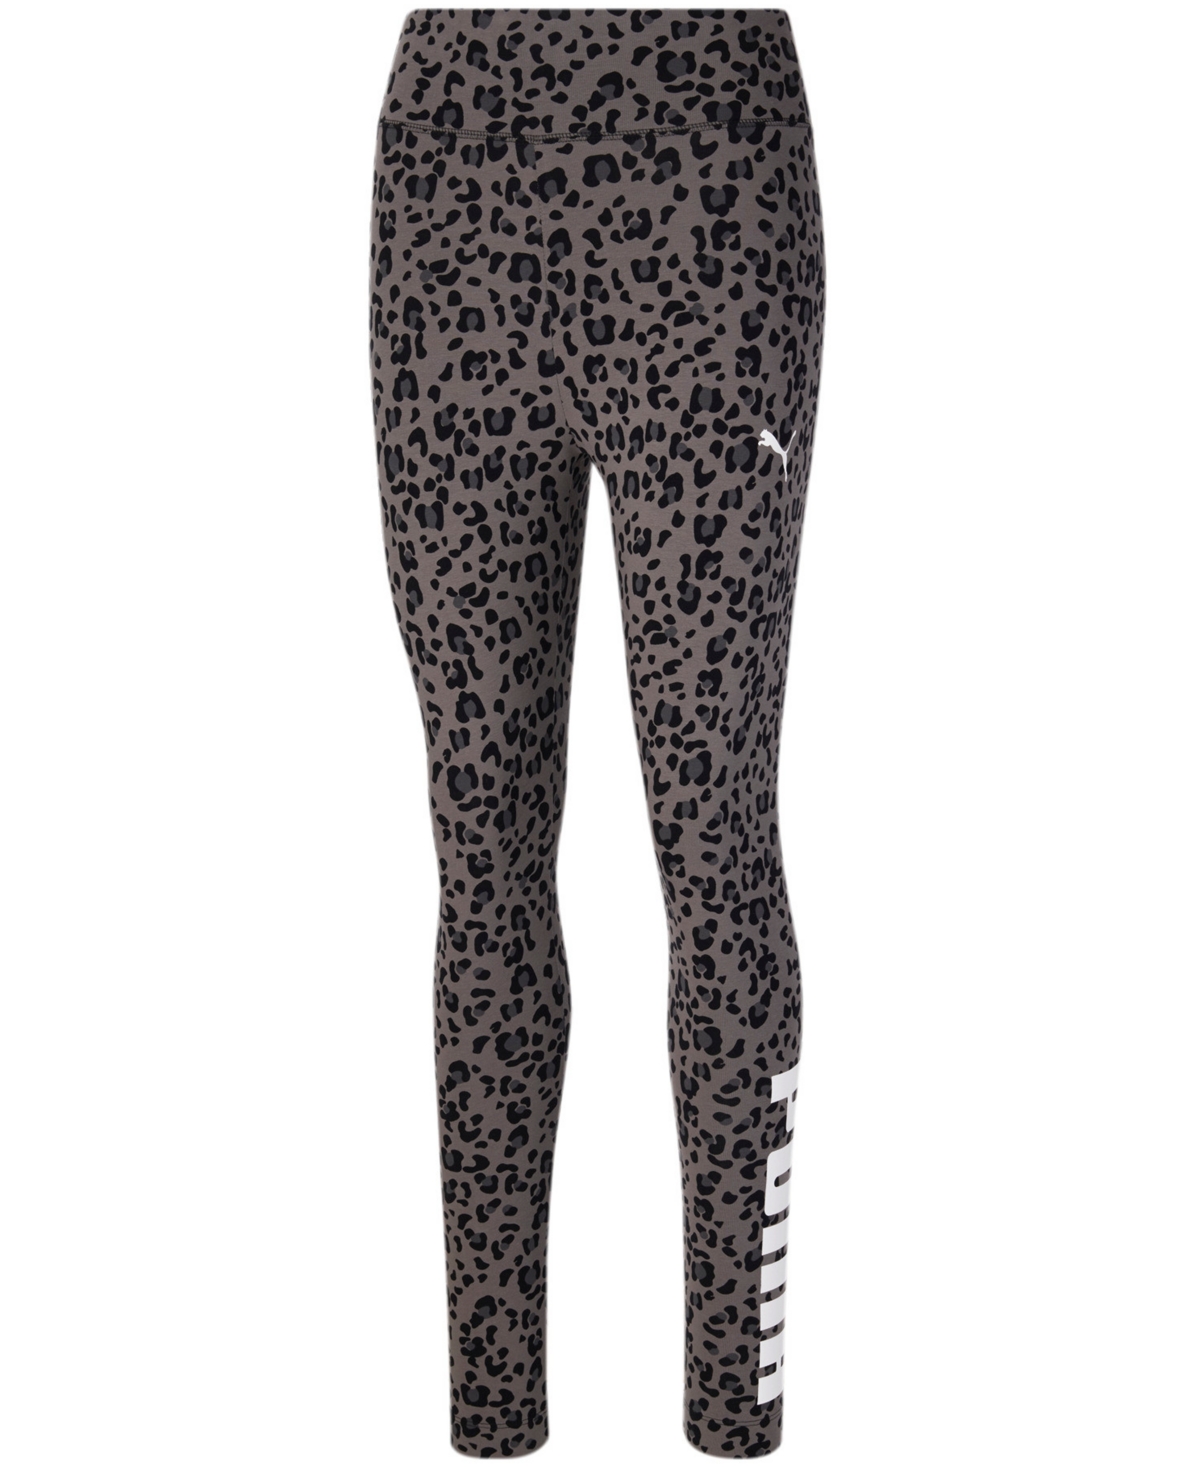 Puma Women's Leopard-Print Leggings